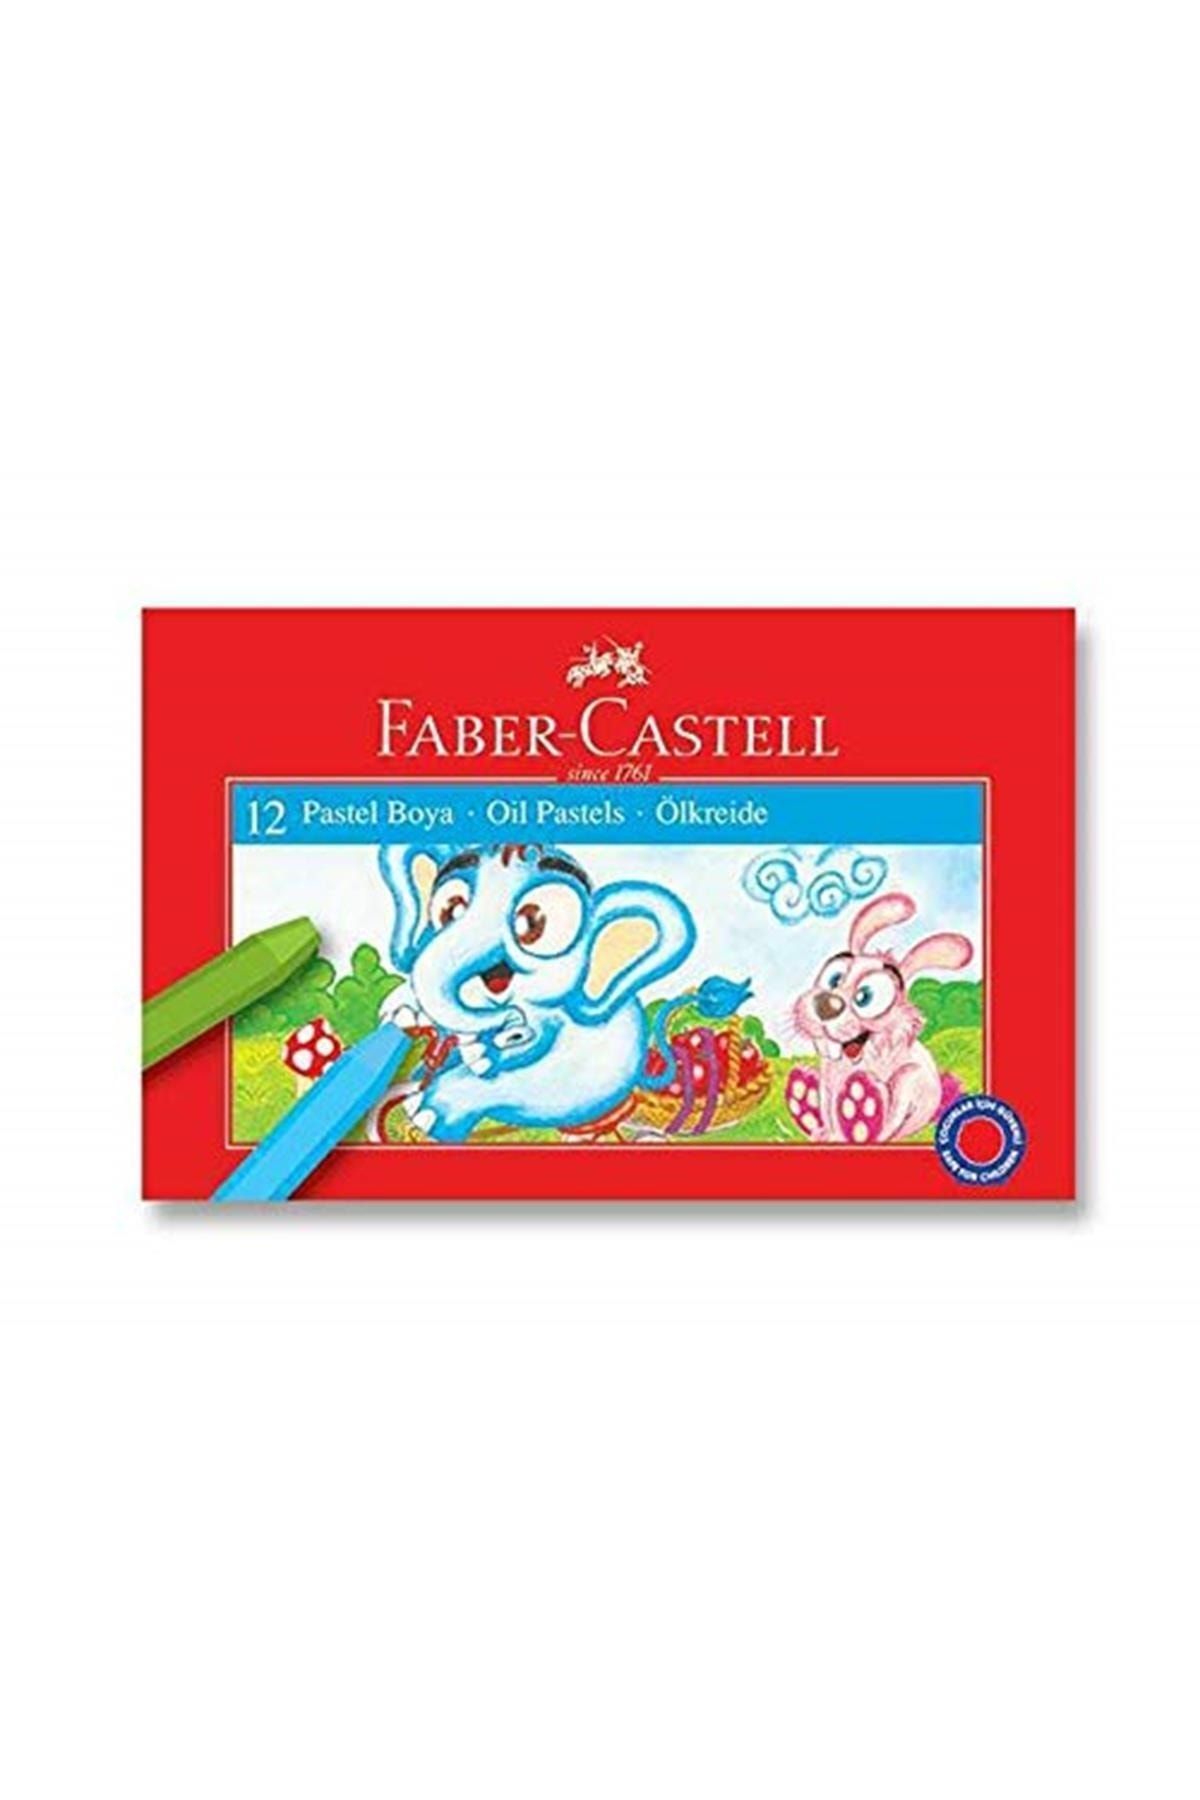 Faber Castell Faber-castell 5282125312 Pastel Boya, 12 Renk